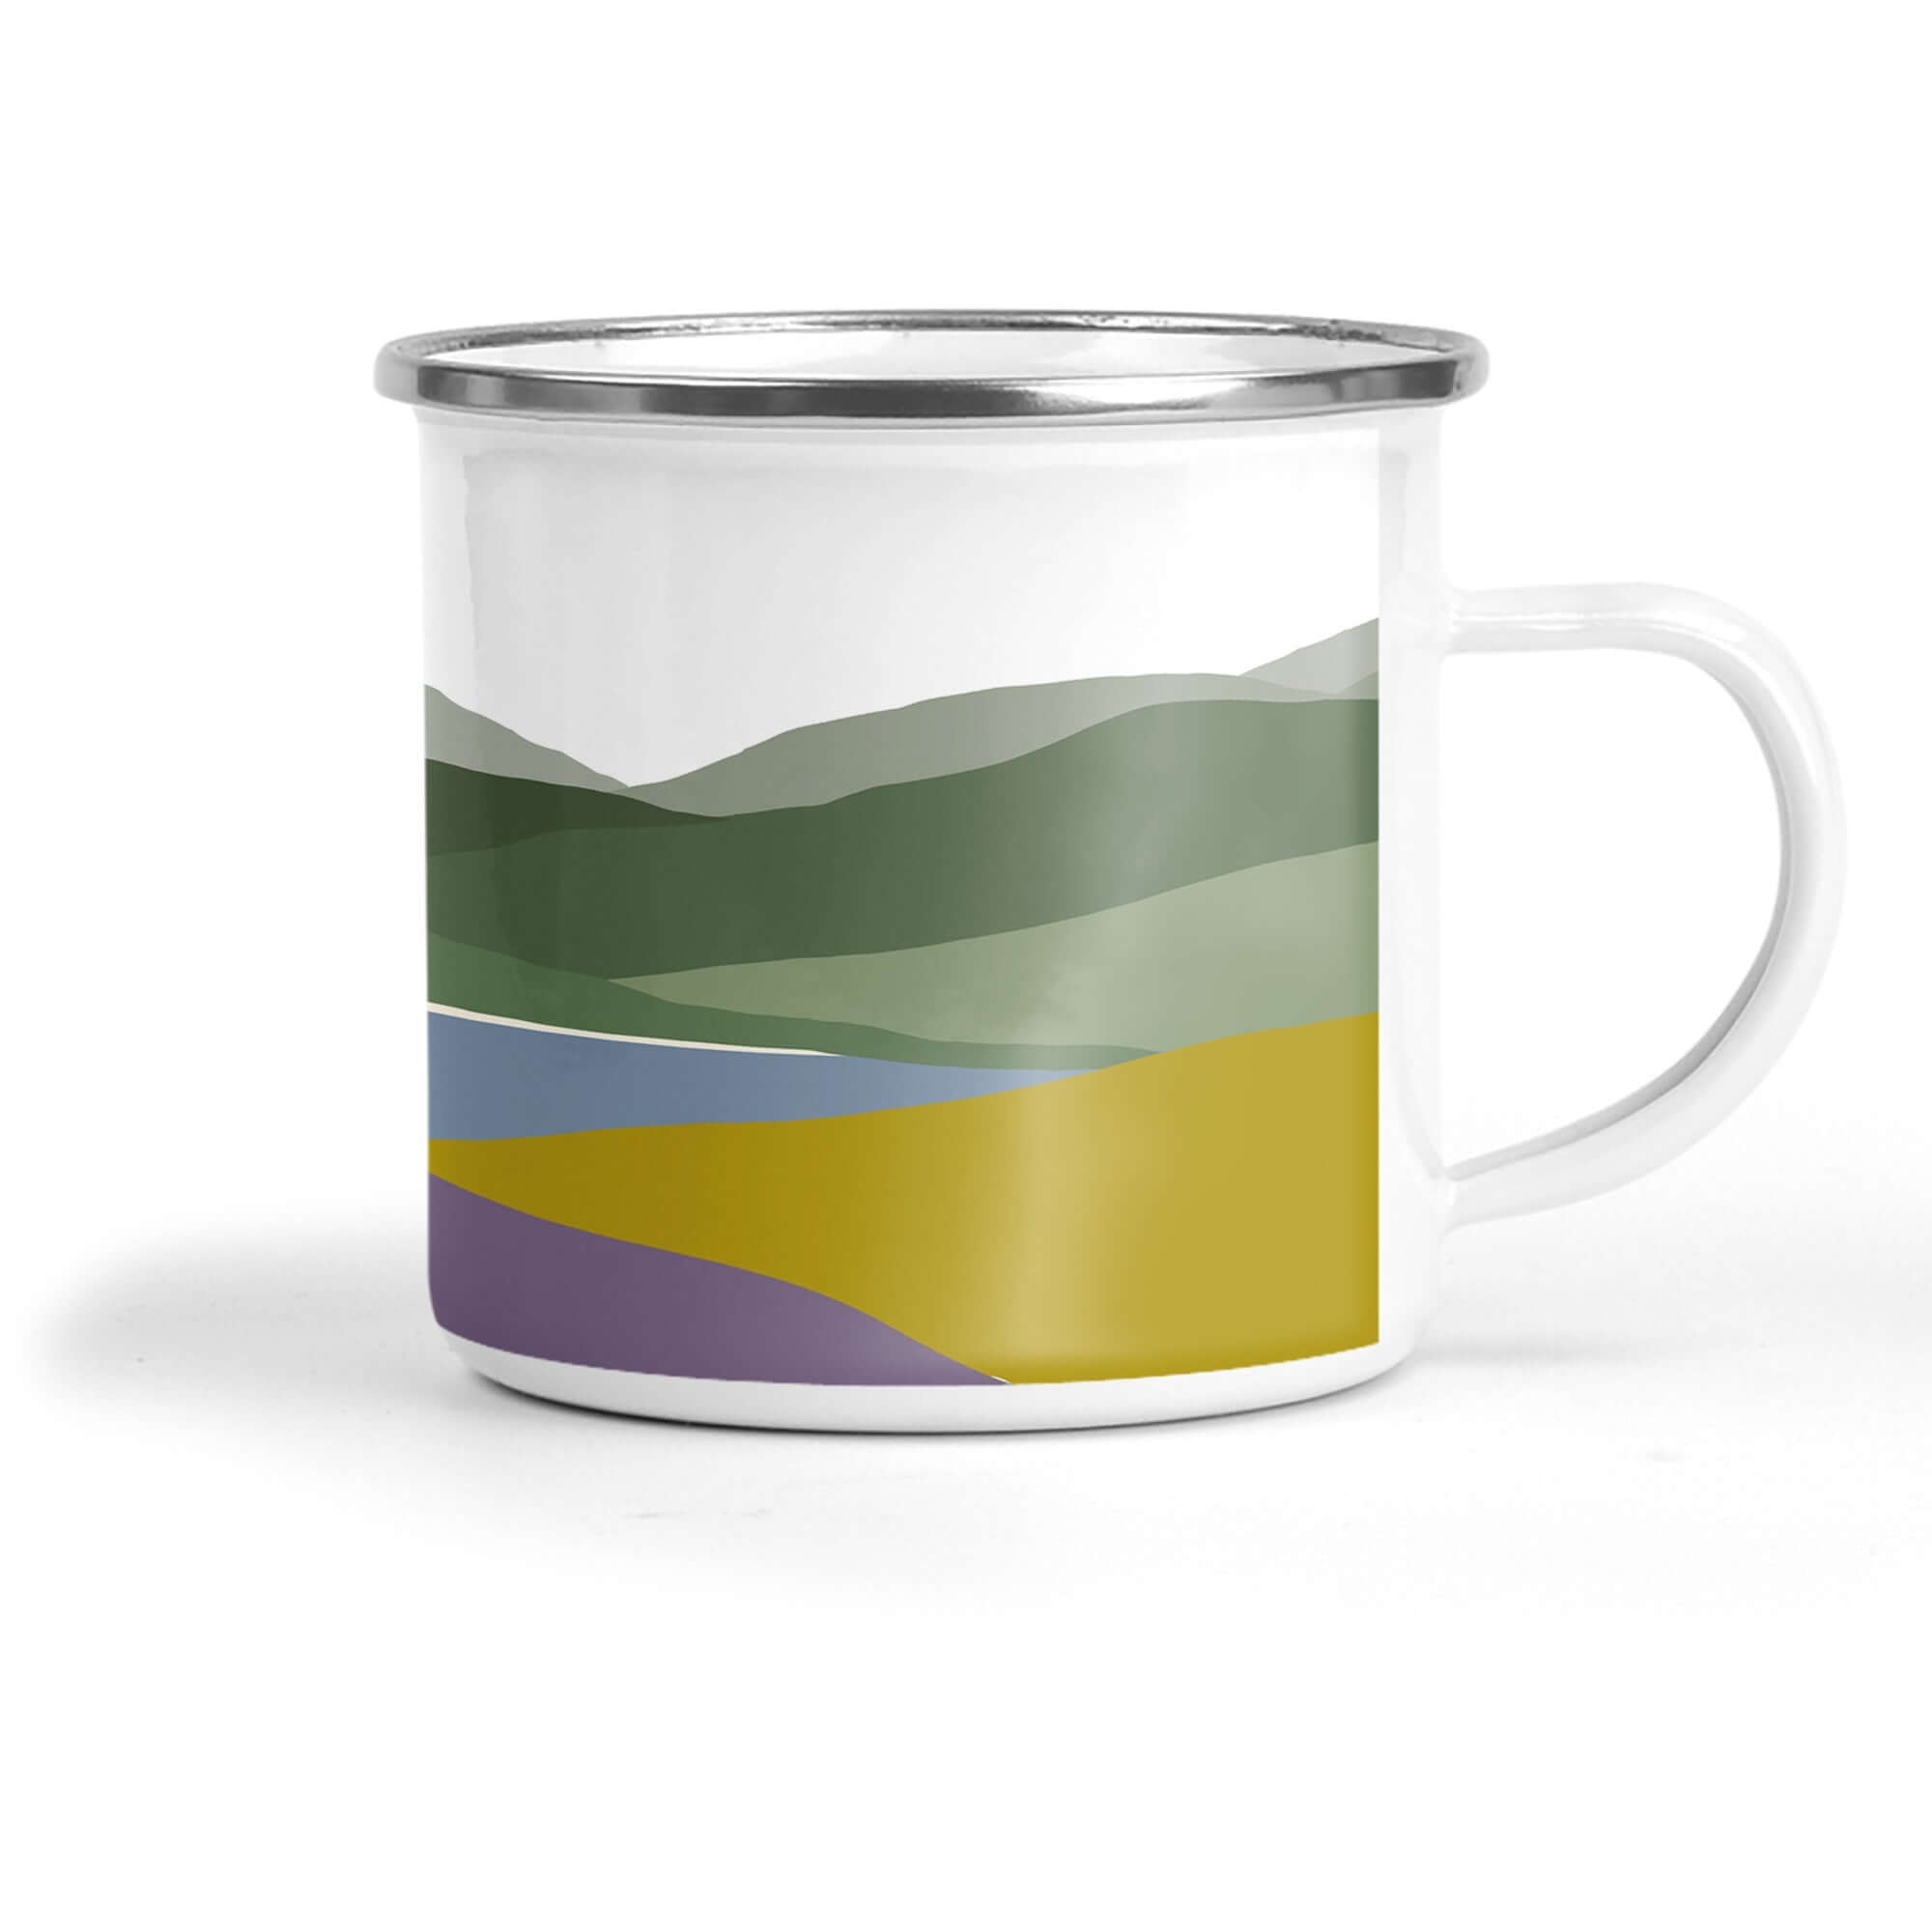 Welsh Hills "Heather and Gorse" Enamel Metal Tin Cup Enamel Mug Mustard and Gray Ltd Shropshire UK